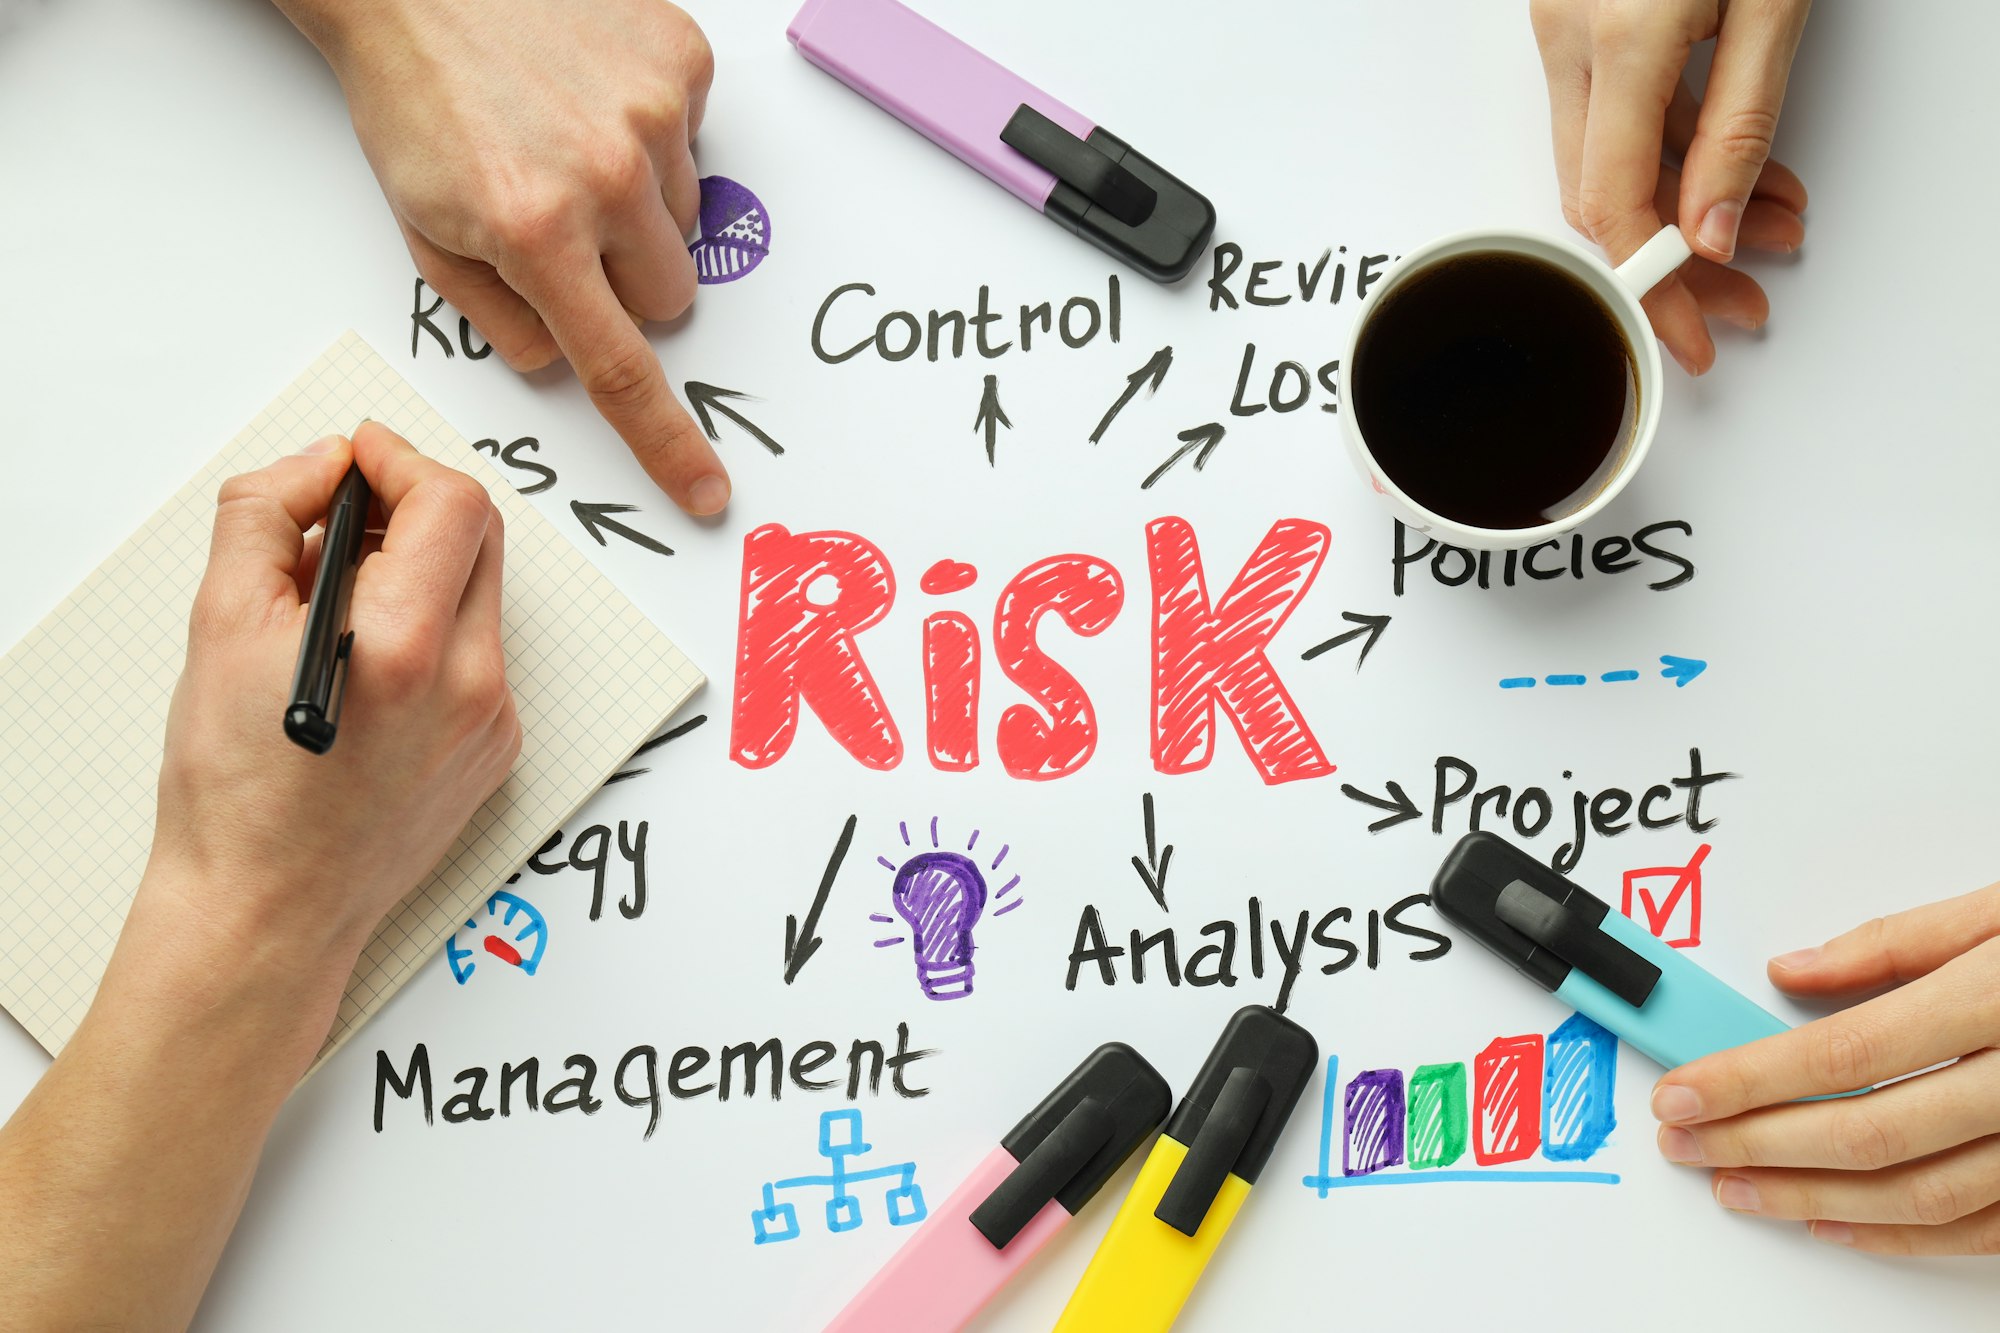 Concept of Risk, Eliminating the risk, Risk protection